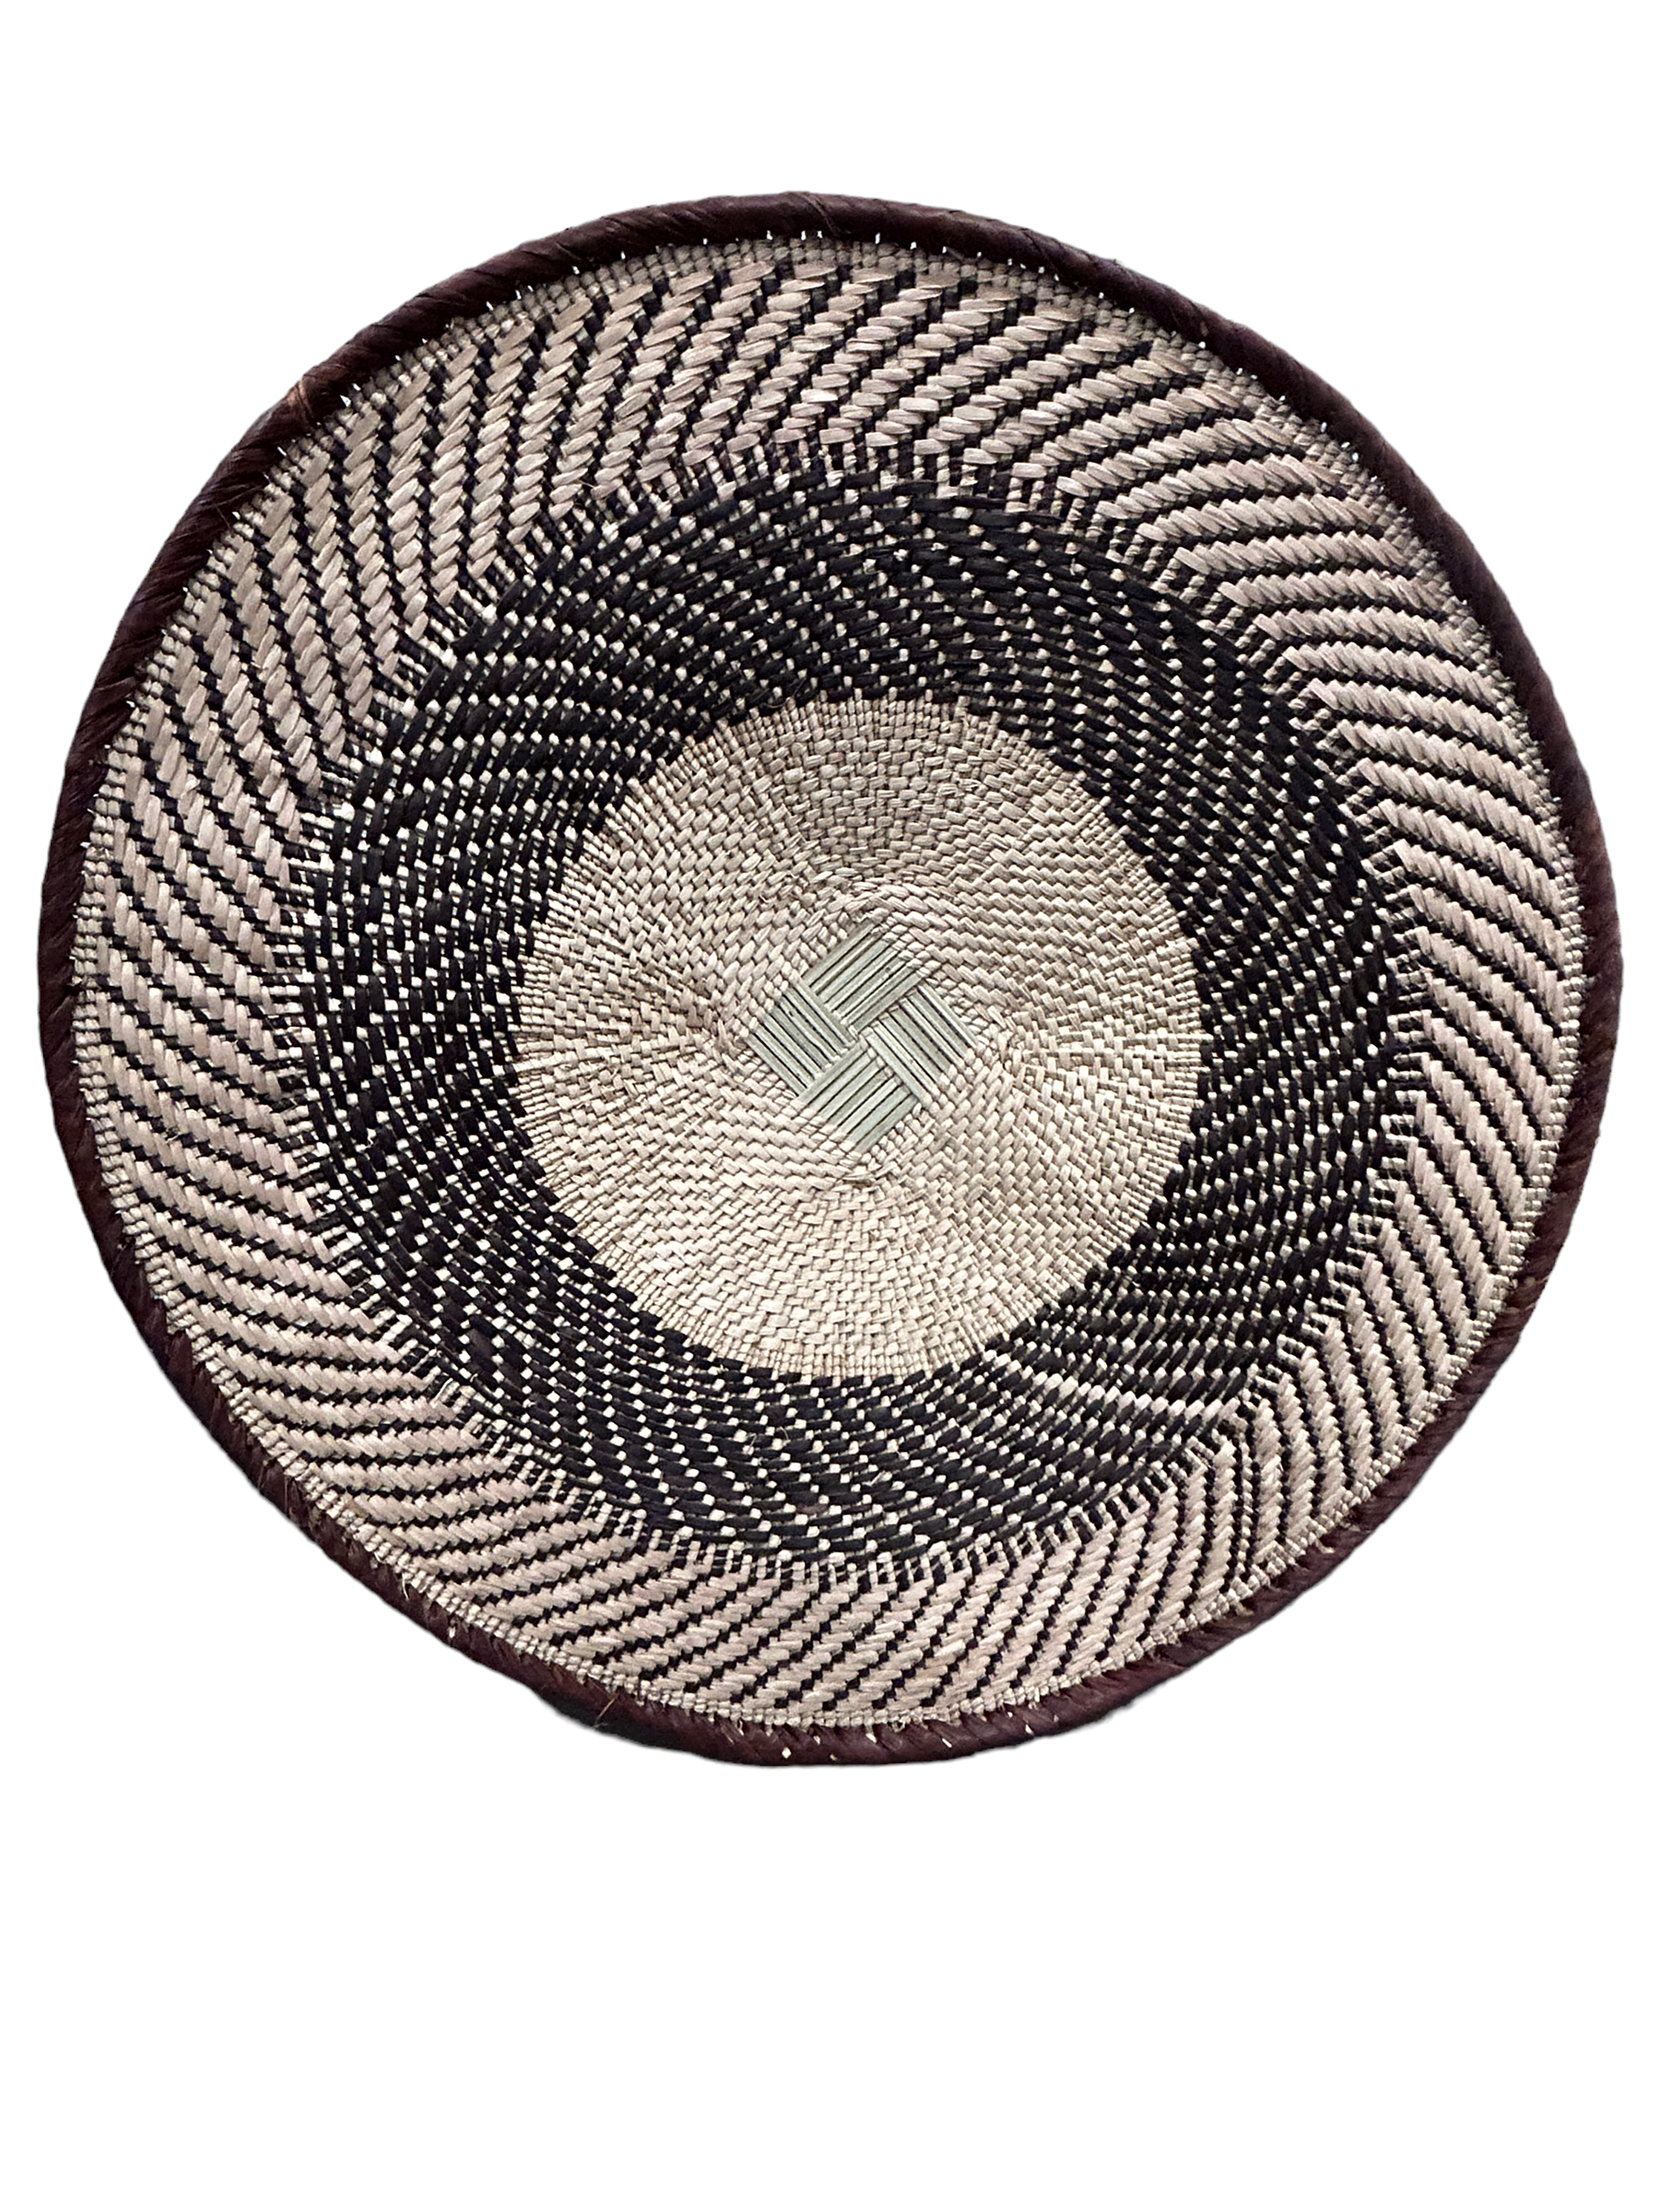 Tonga Basket Natural (45-15)